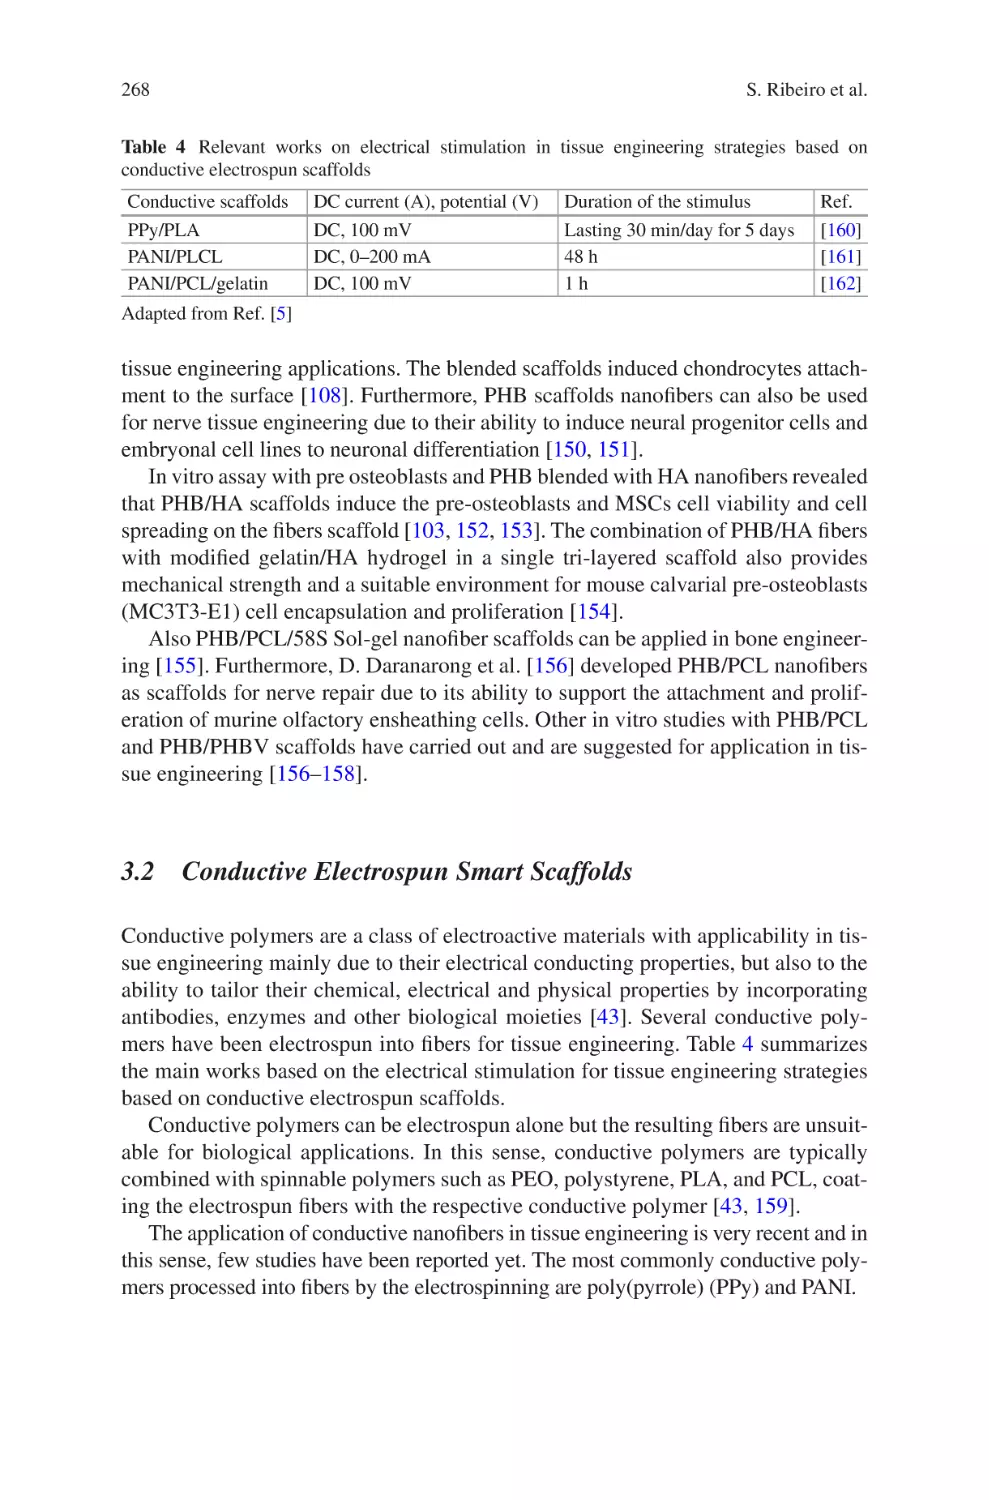 3.2 Conductive Electrospun Smart Scaffolds